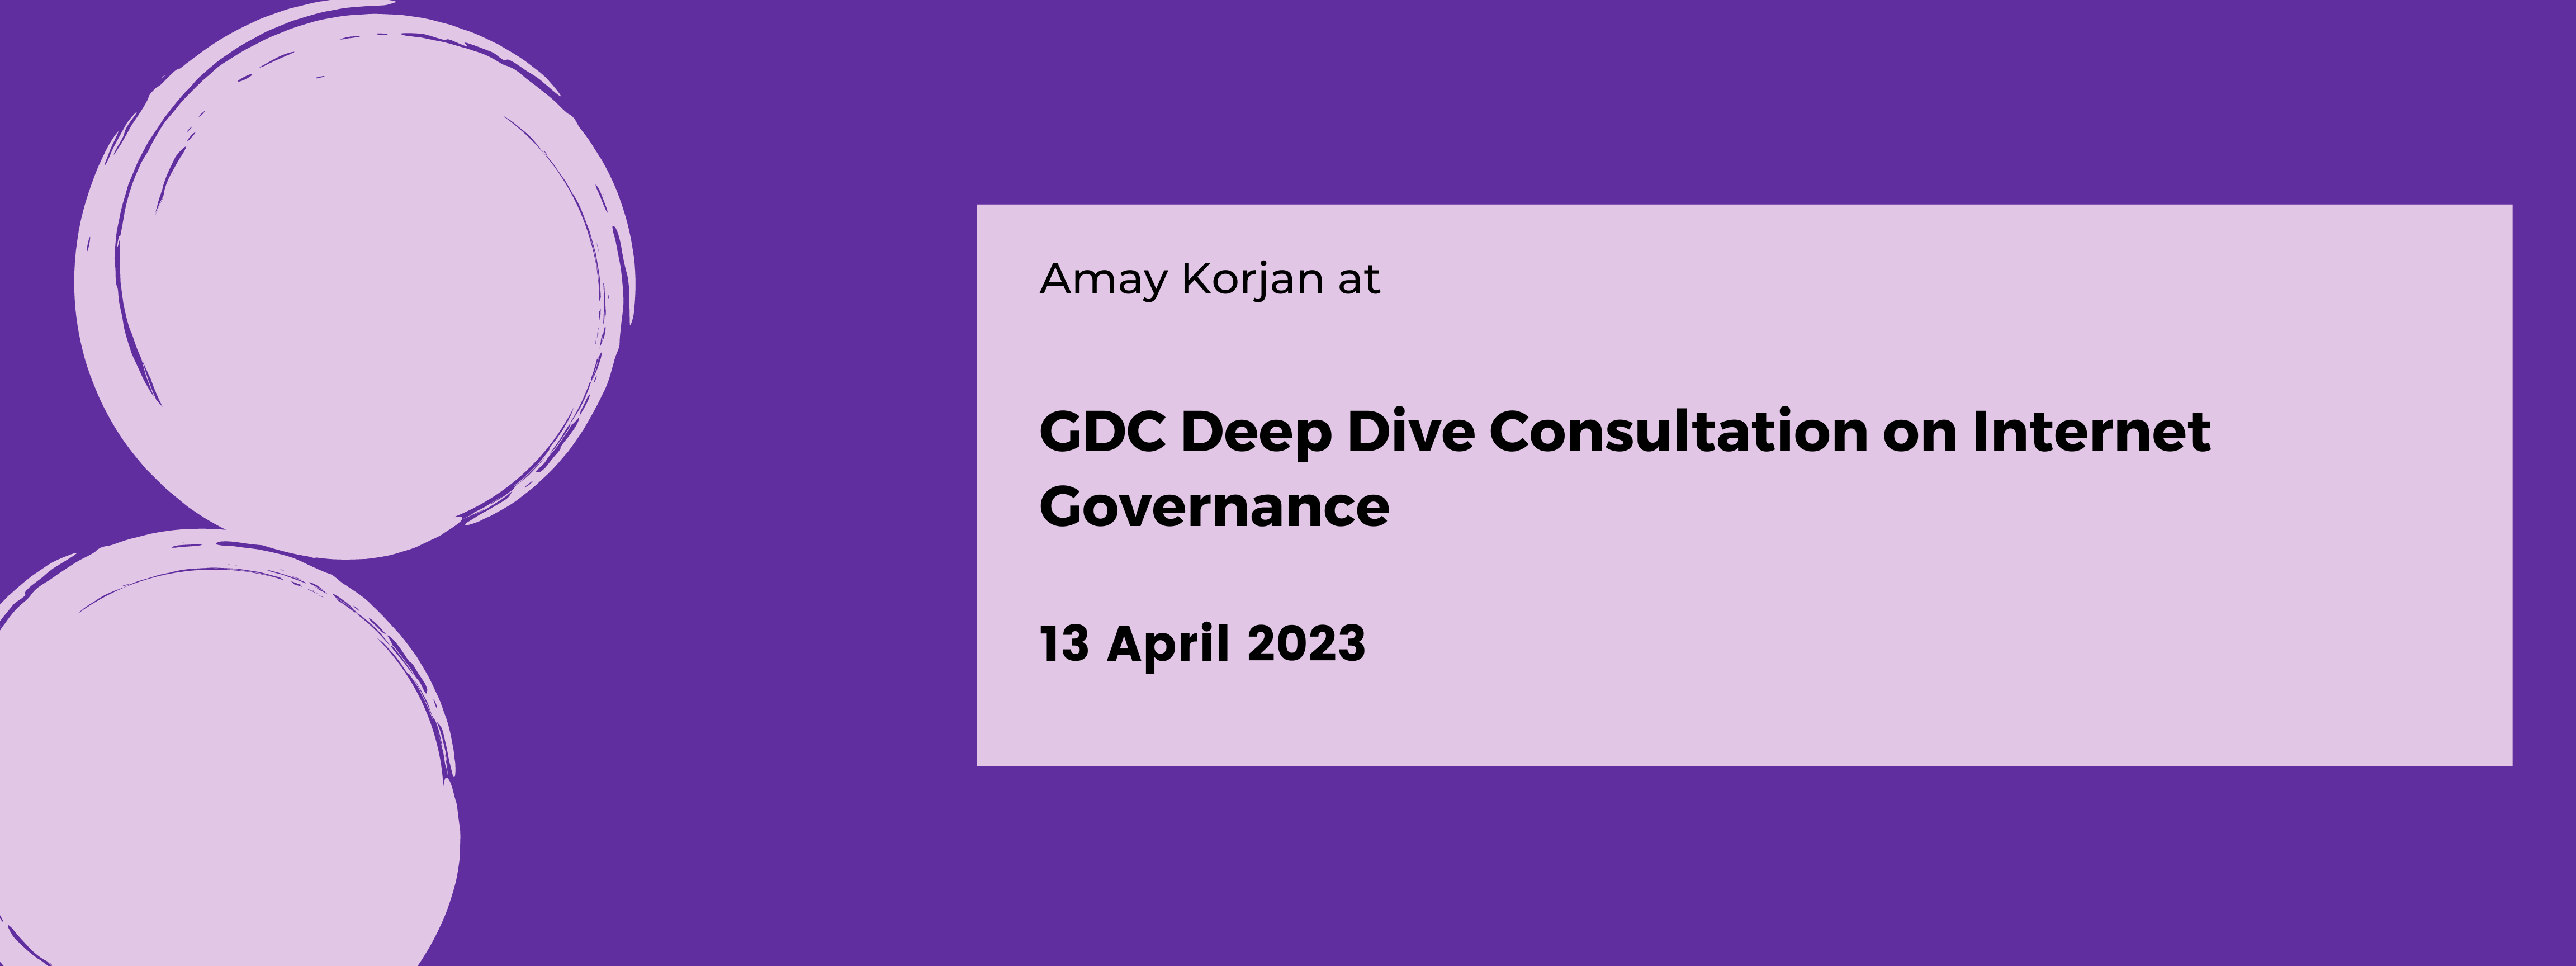 GDC Deep Dive Consultation on Internet Governance